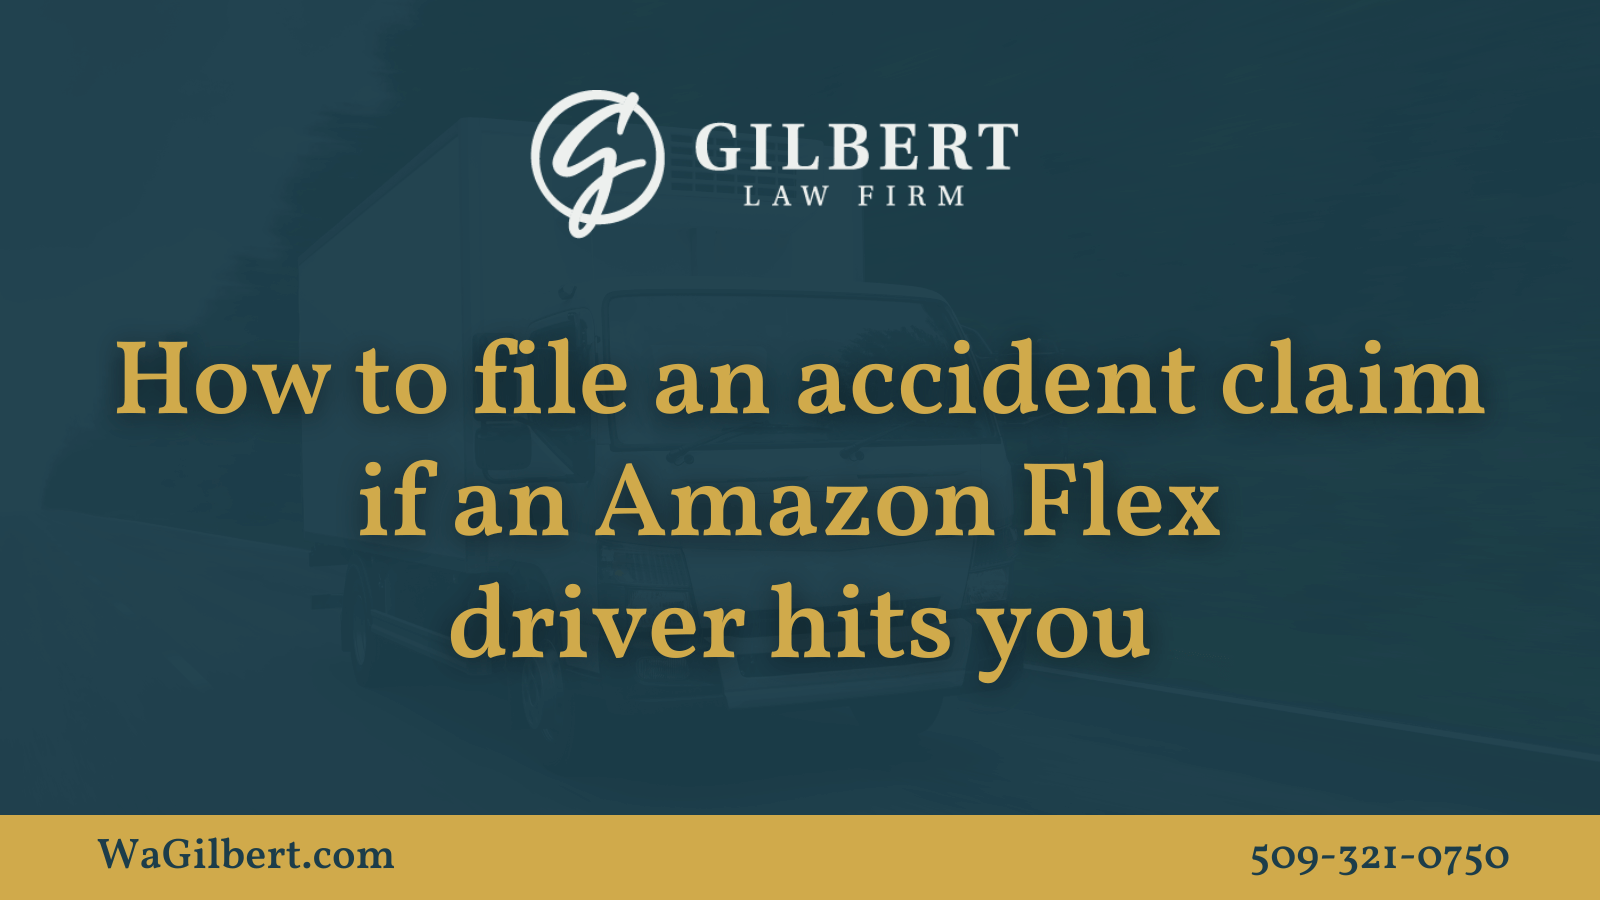 How to file an accident claim if an Amazon Flex driver hits you | Gilbert Law Firm Spokane Washington